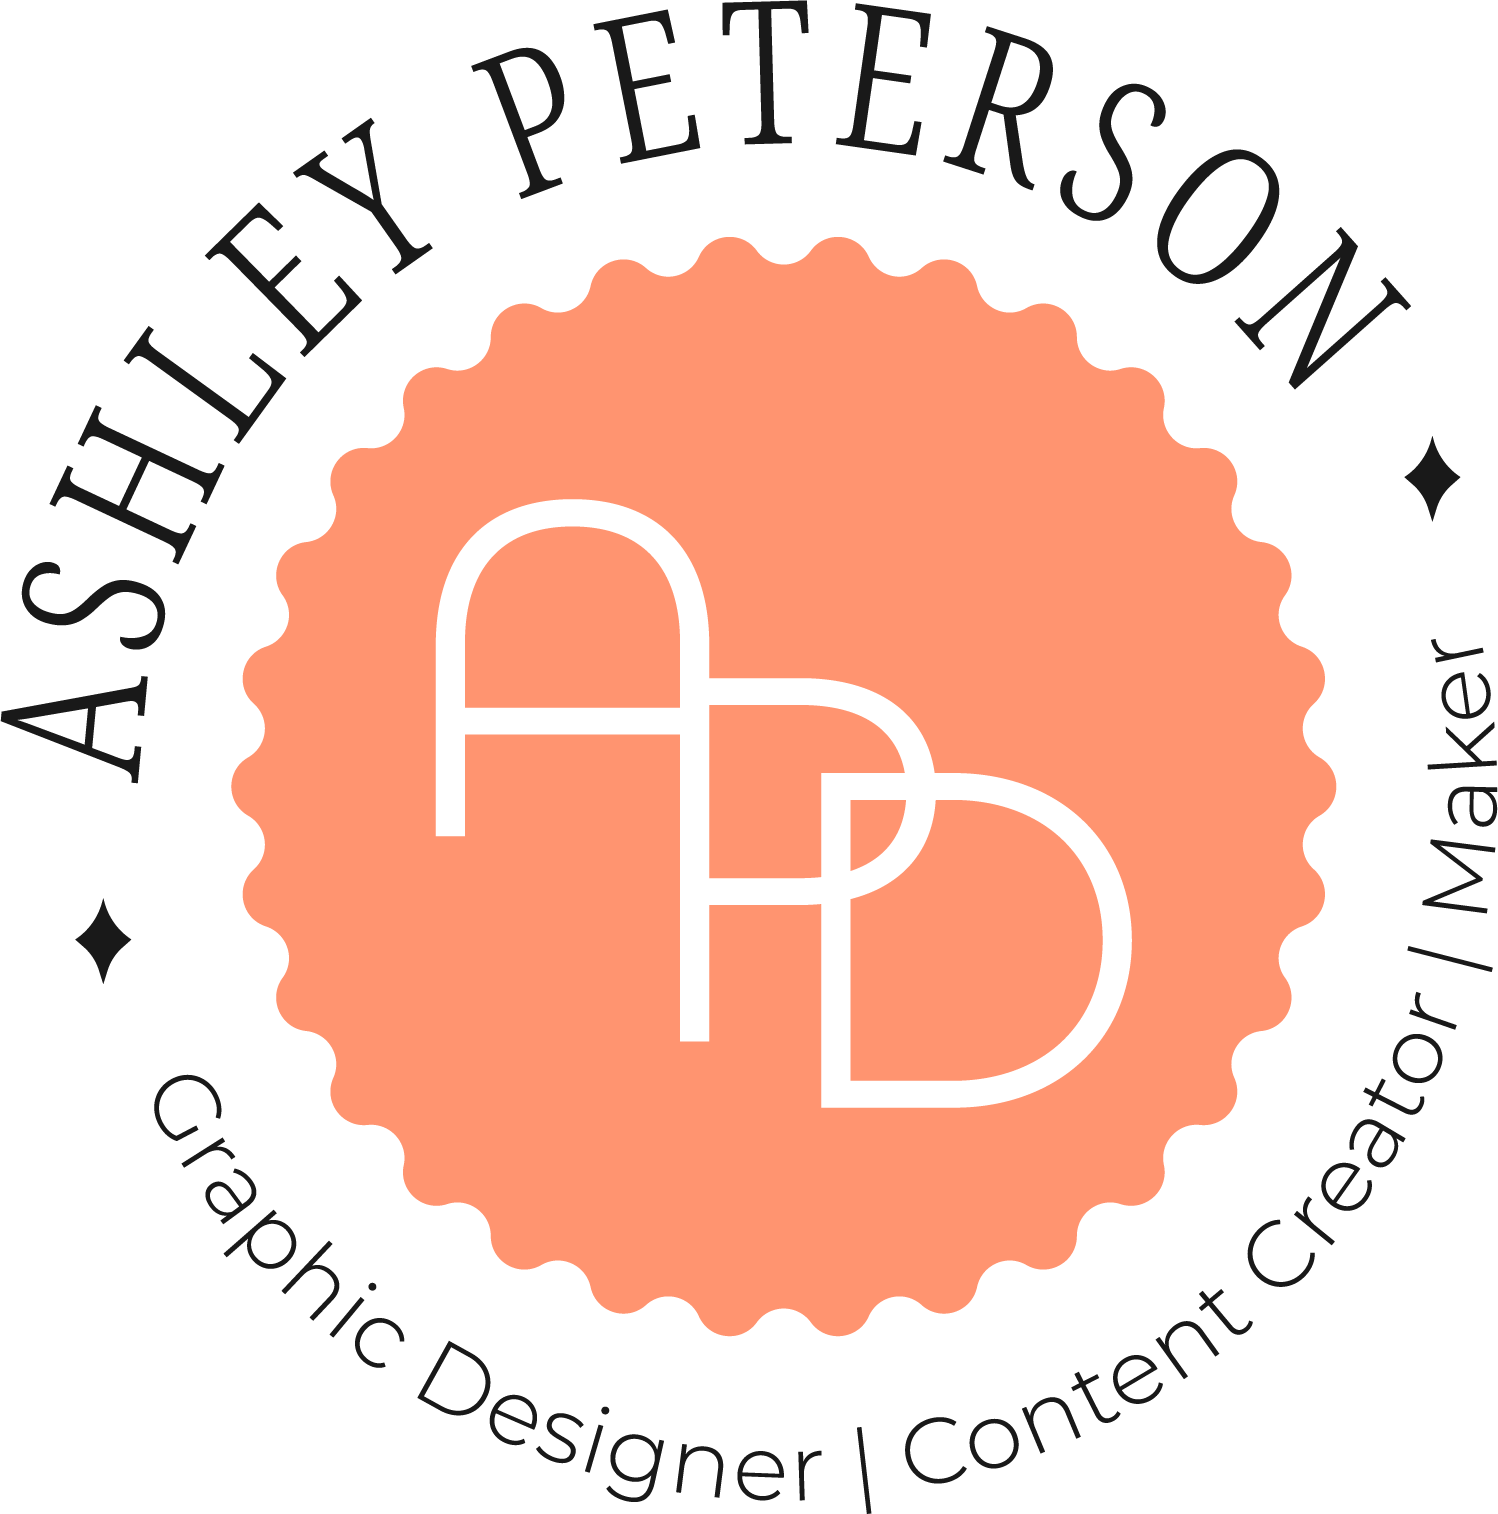 ashley peterson design logo salmon